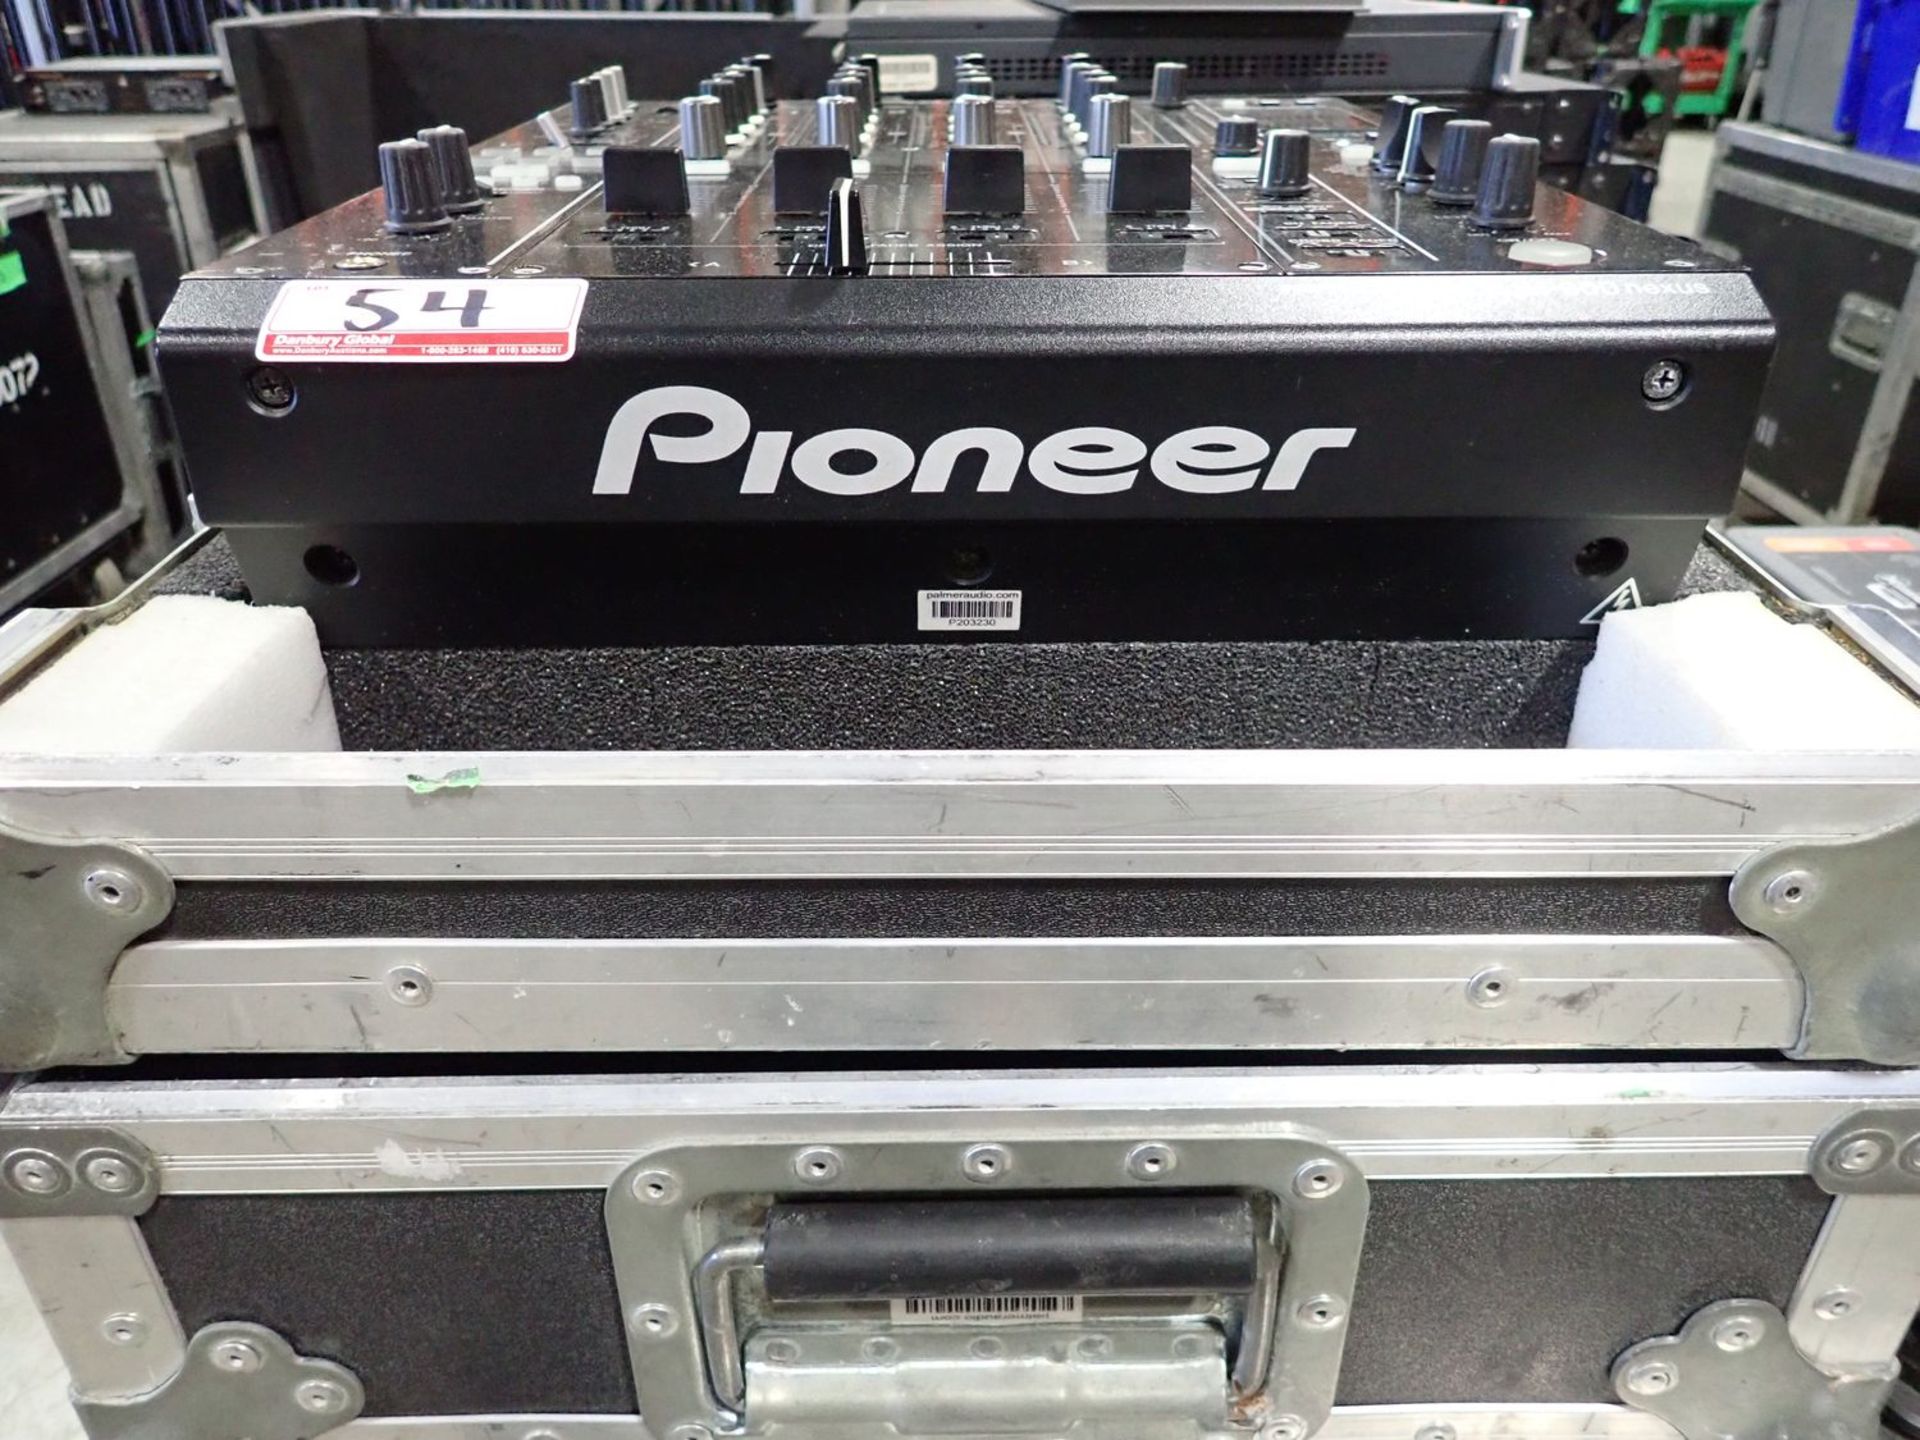 PIONEER DJM-900 NEXUS PROFESSIONAL MIXER - Image 2 of 3